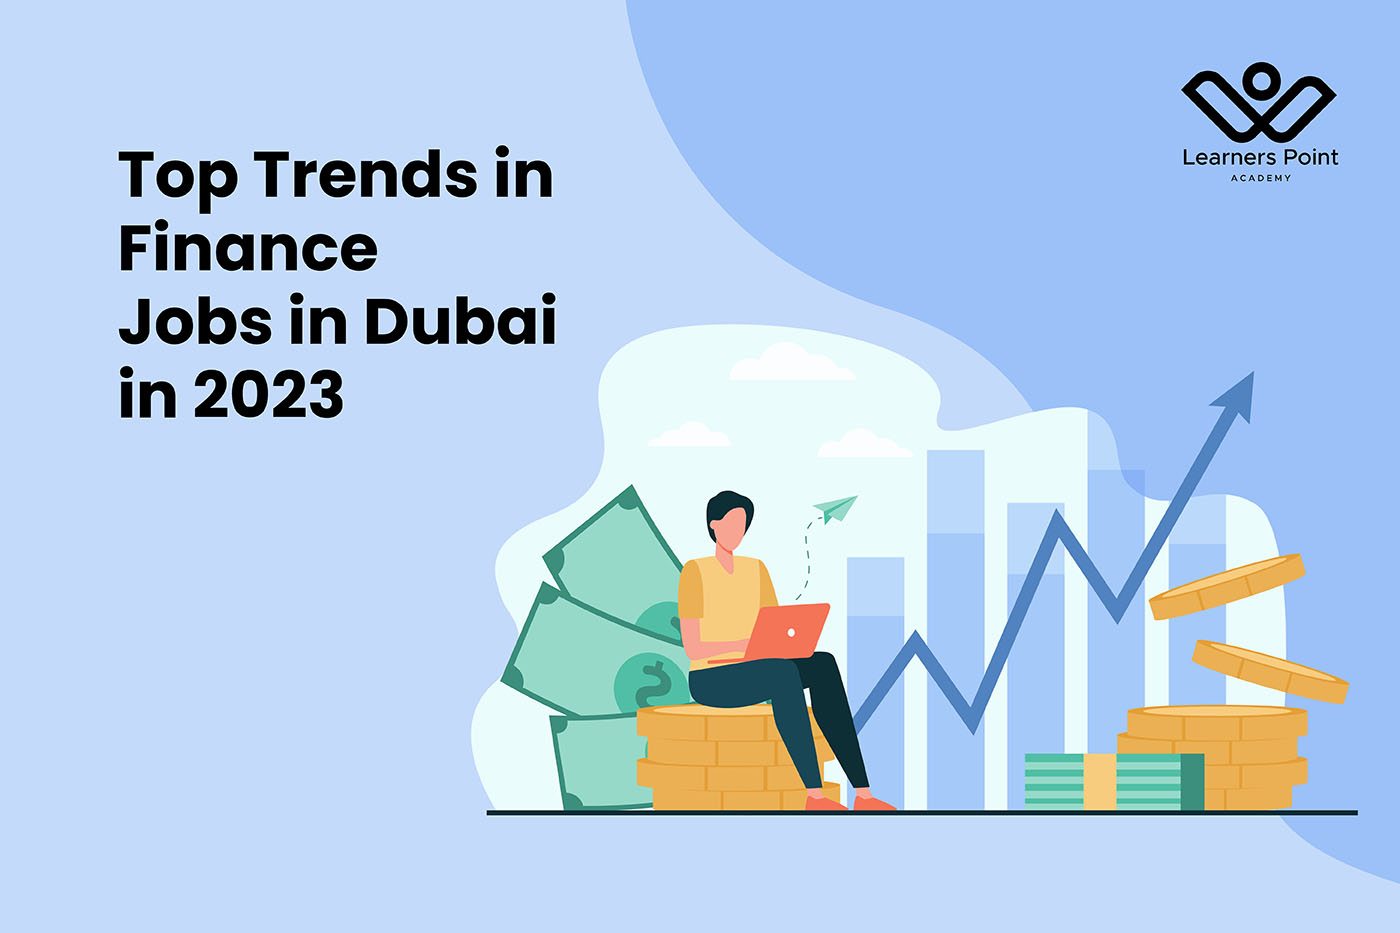 Top Trends in Finance Jobs in Dubai in 2023